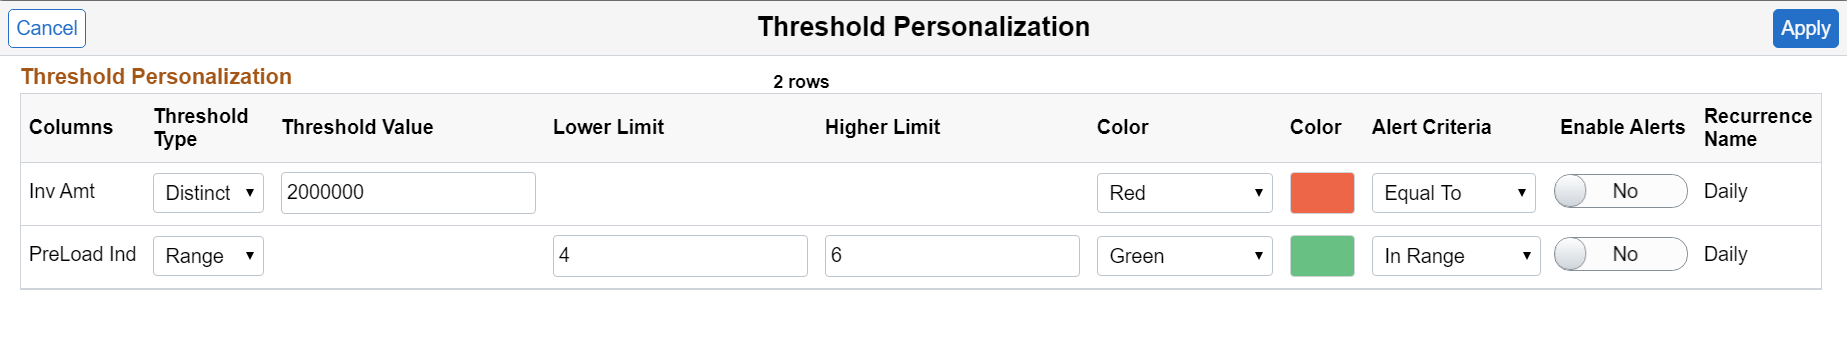 Threshold Personalization dialog box